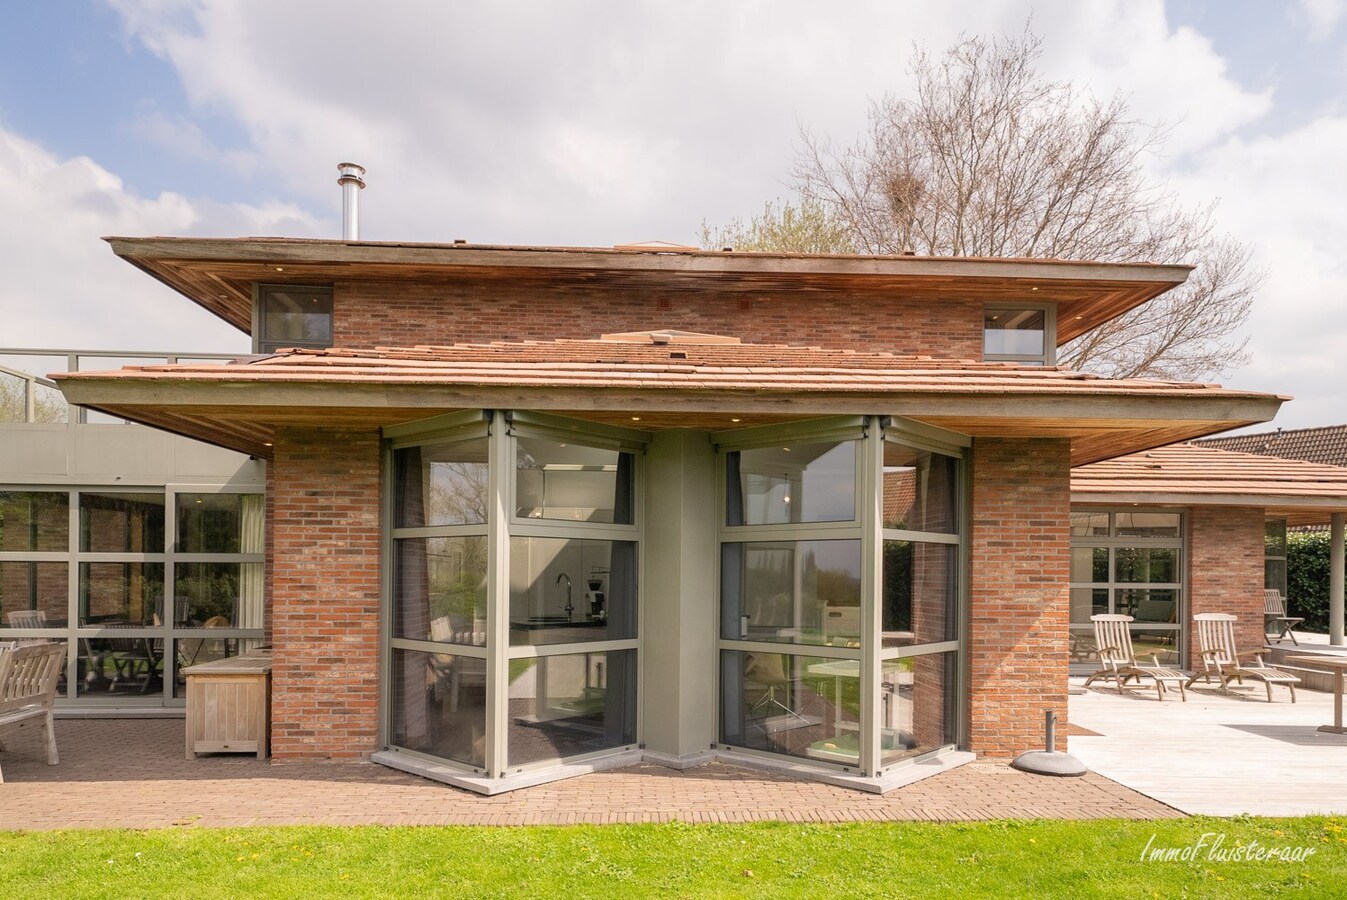 Villa sold in Merchtem